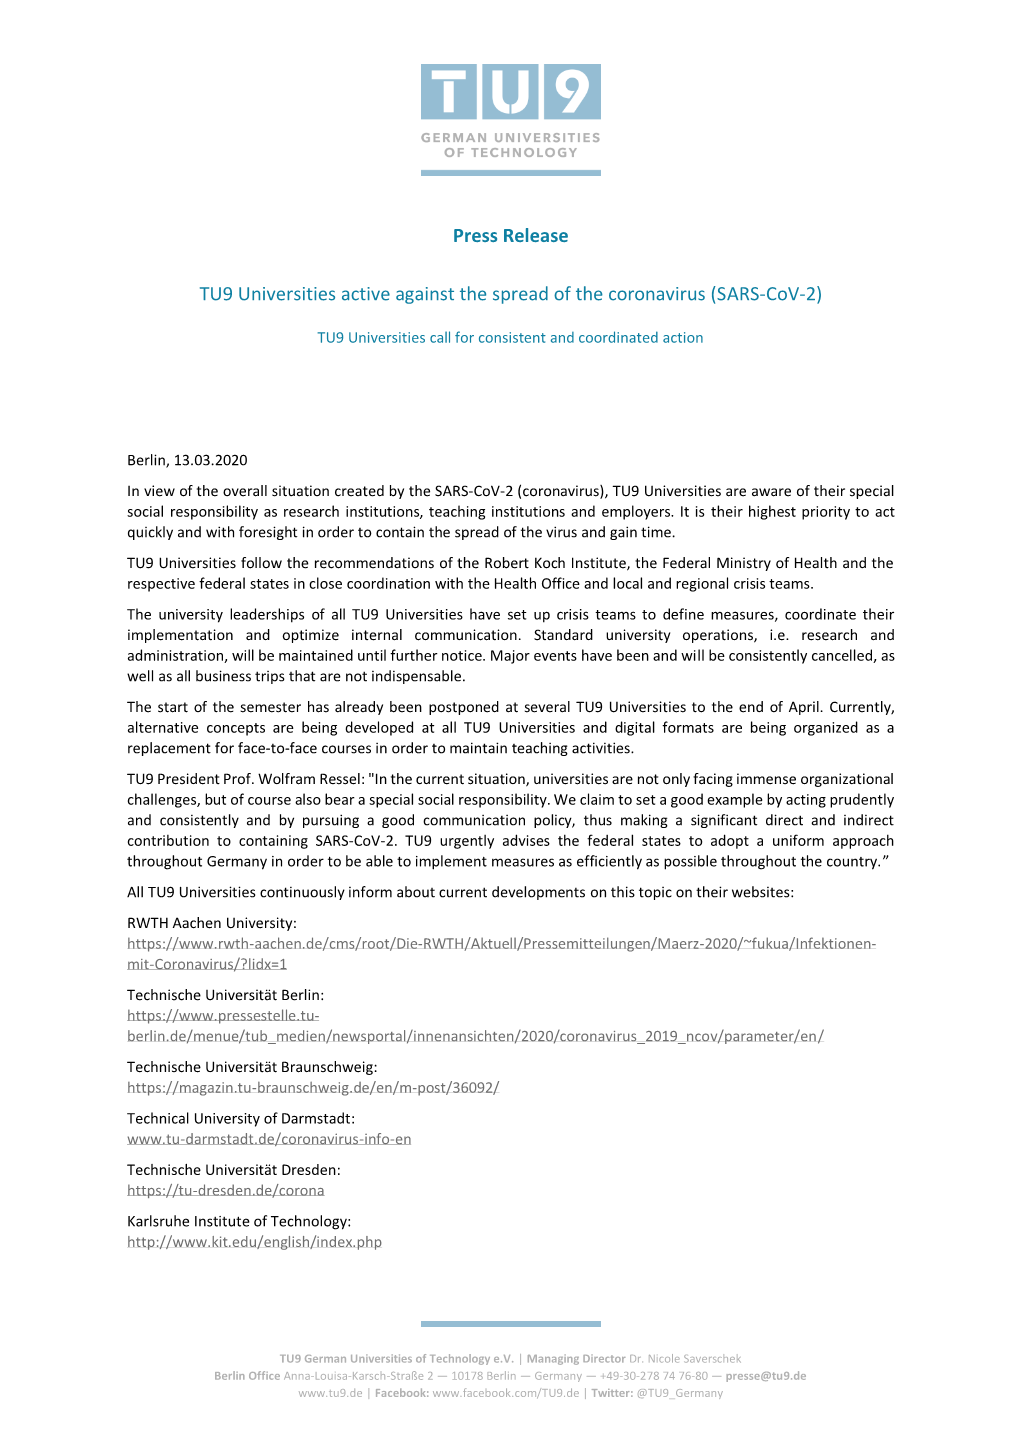 Press Release TU9 Universities Active Against the Spread of the Coronavirus